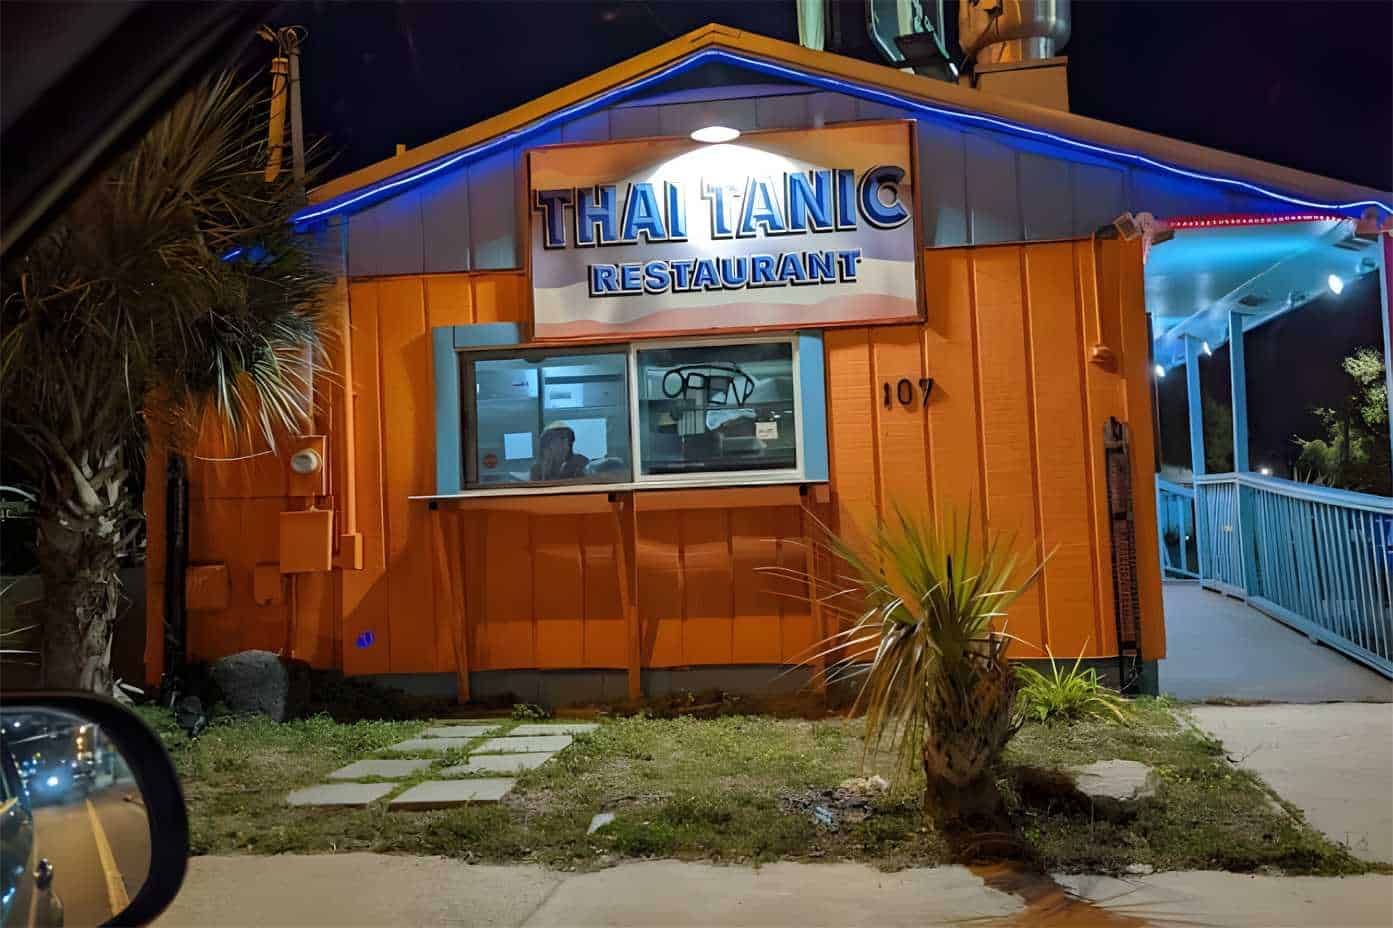 Thai Tanic Restaurant Best Restaurants in Destin, FL